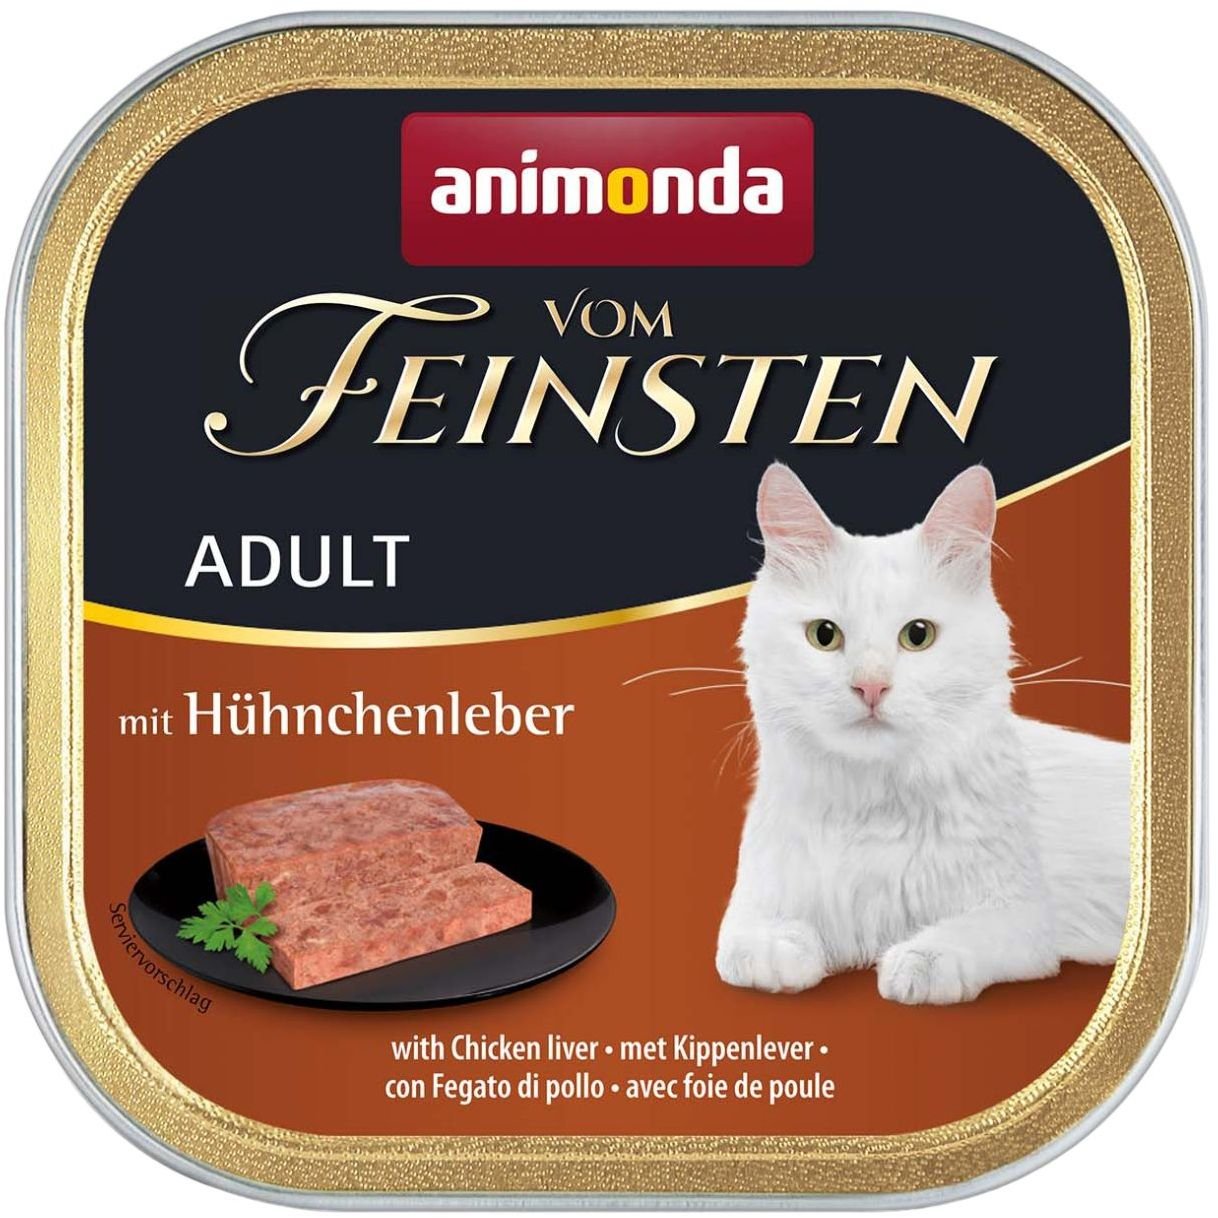 Вологий корм для котів Animonda Vom Feinsten Adult with Chicken liver, з курячою печінкою, 100 г - фото 1